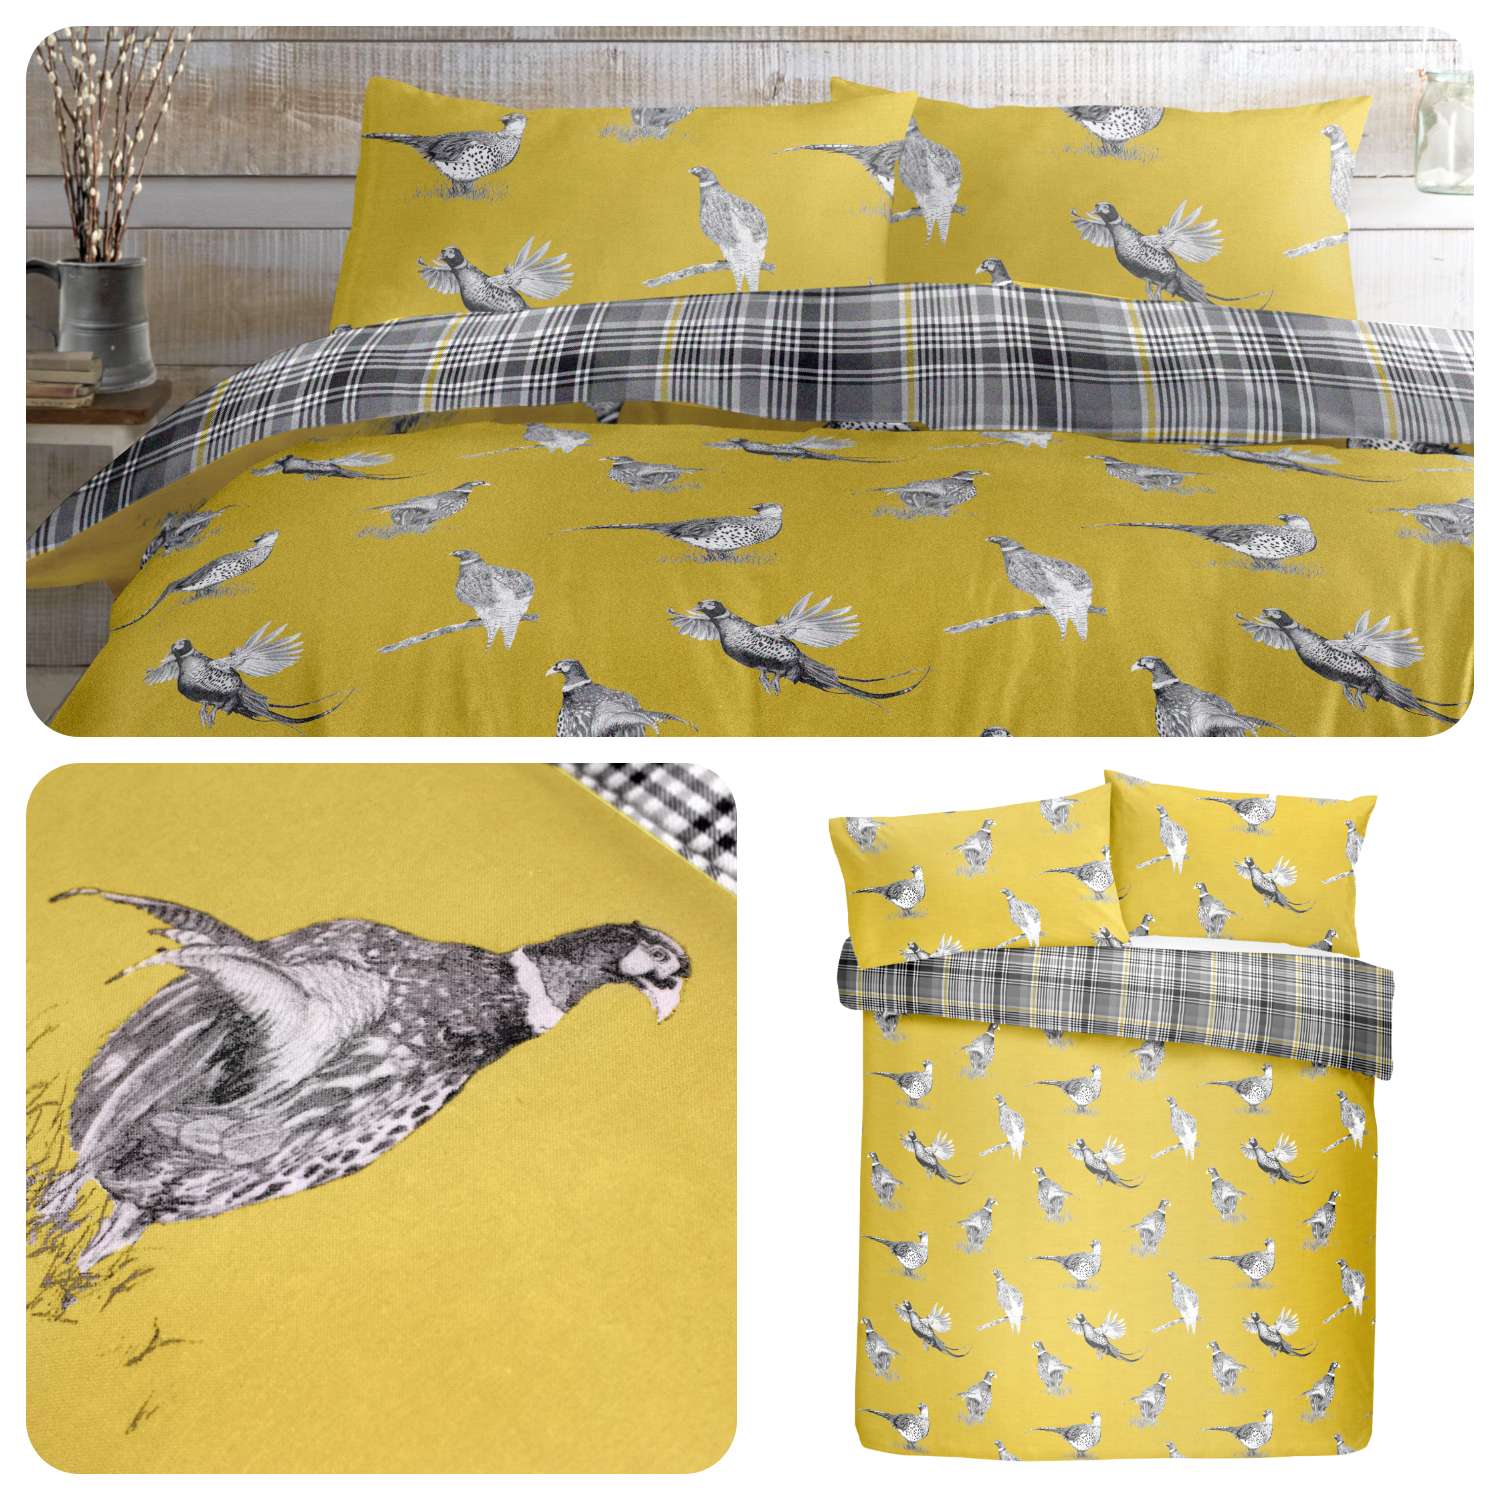 Designer Country Pheasant Bedding Reversible Easycare Grey Birds Duvet Cover Set